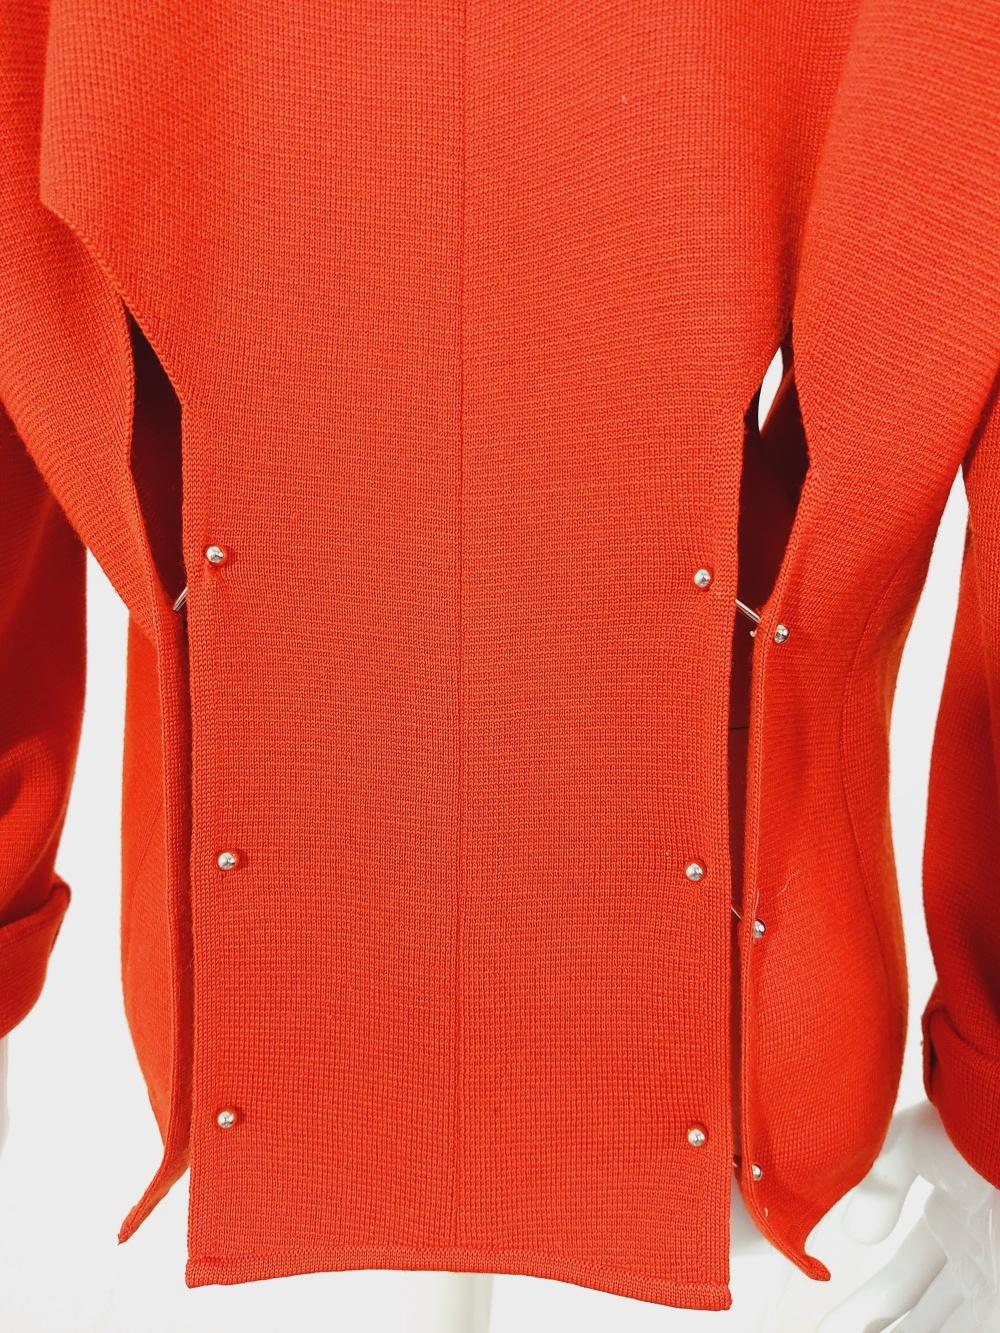 Women's Issey Miyake Pleats Please Red Piercing Punk Deconstructed Rivet Coat Jacket For Sale